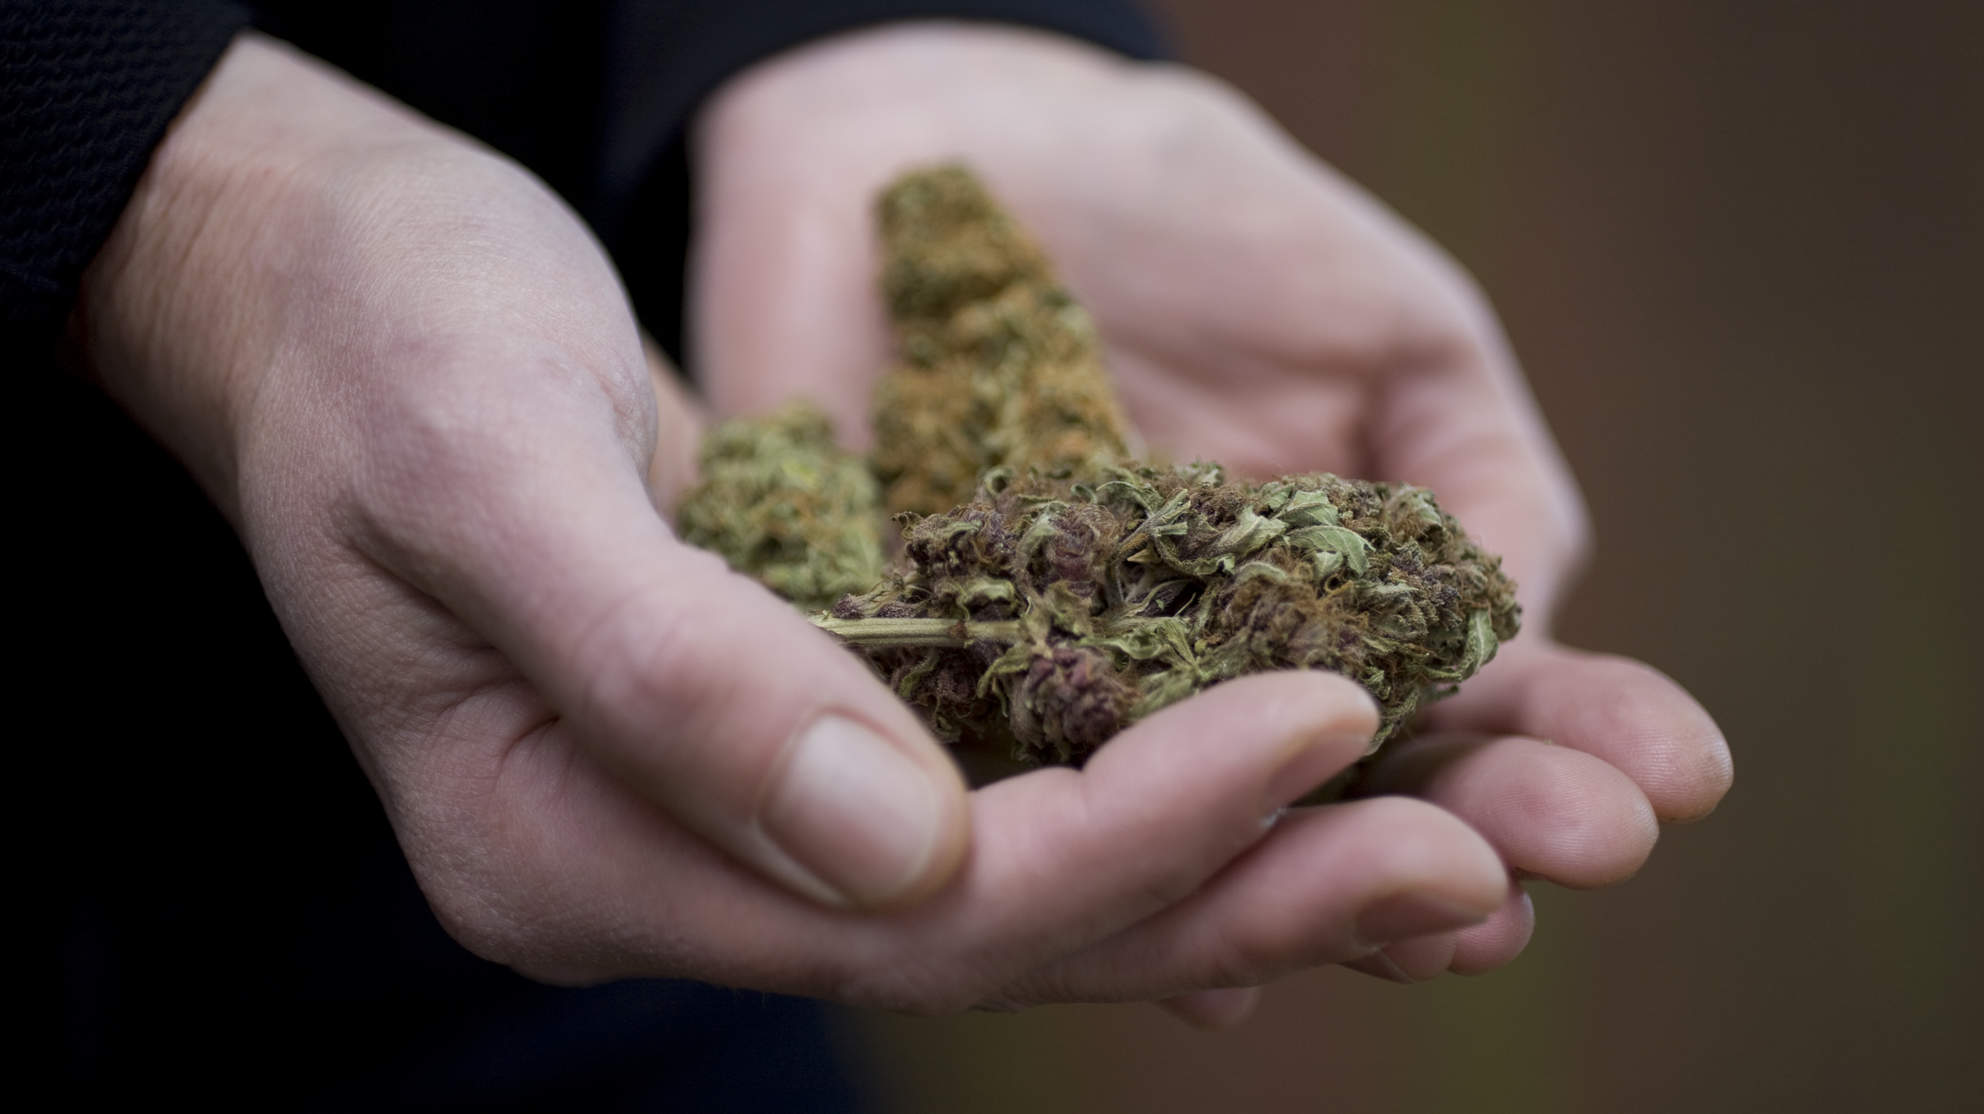 Close-up of hands holding marijuana strains